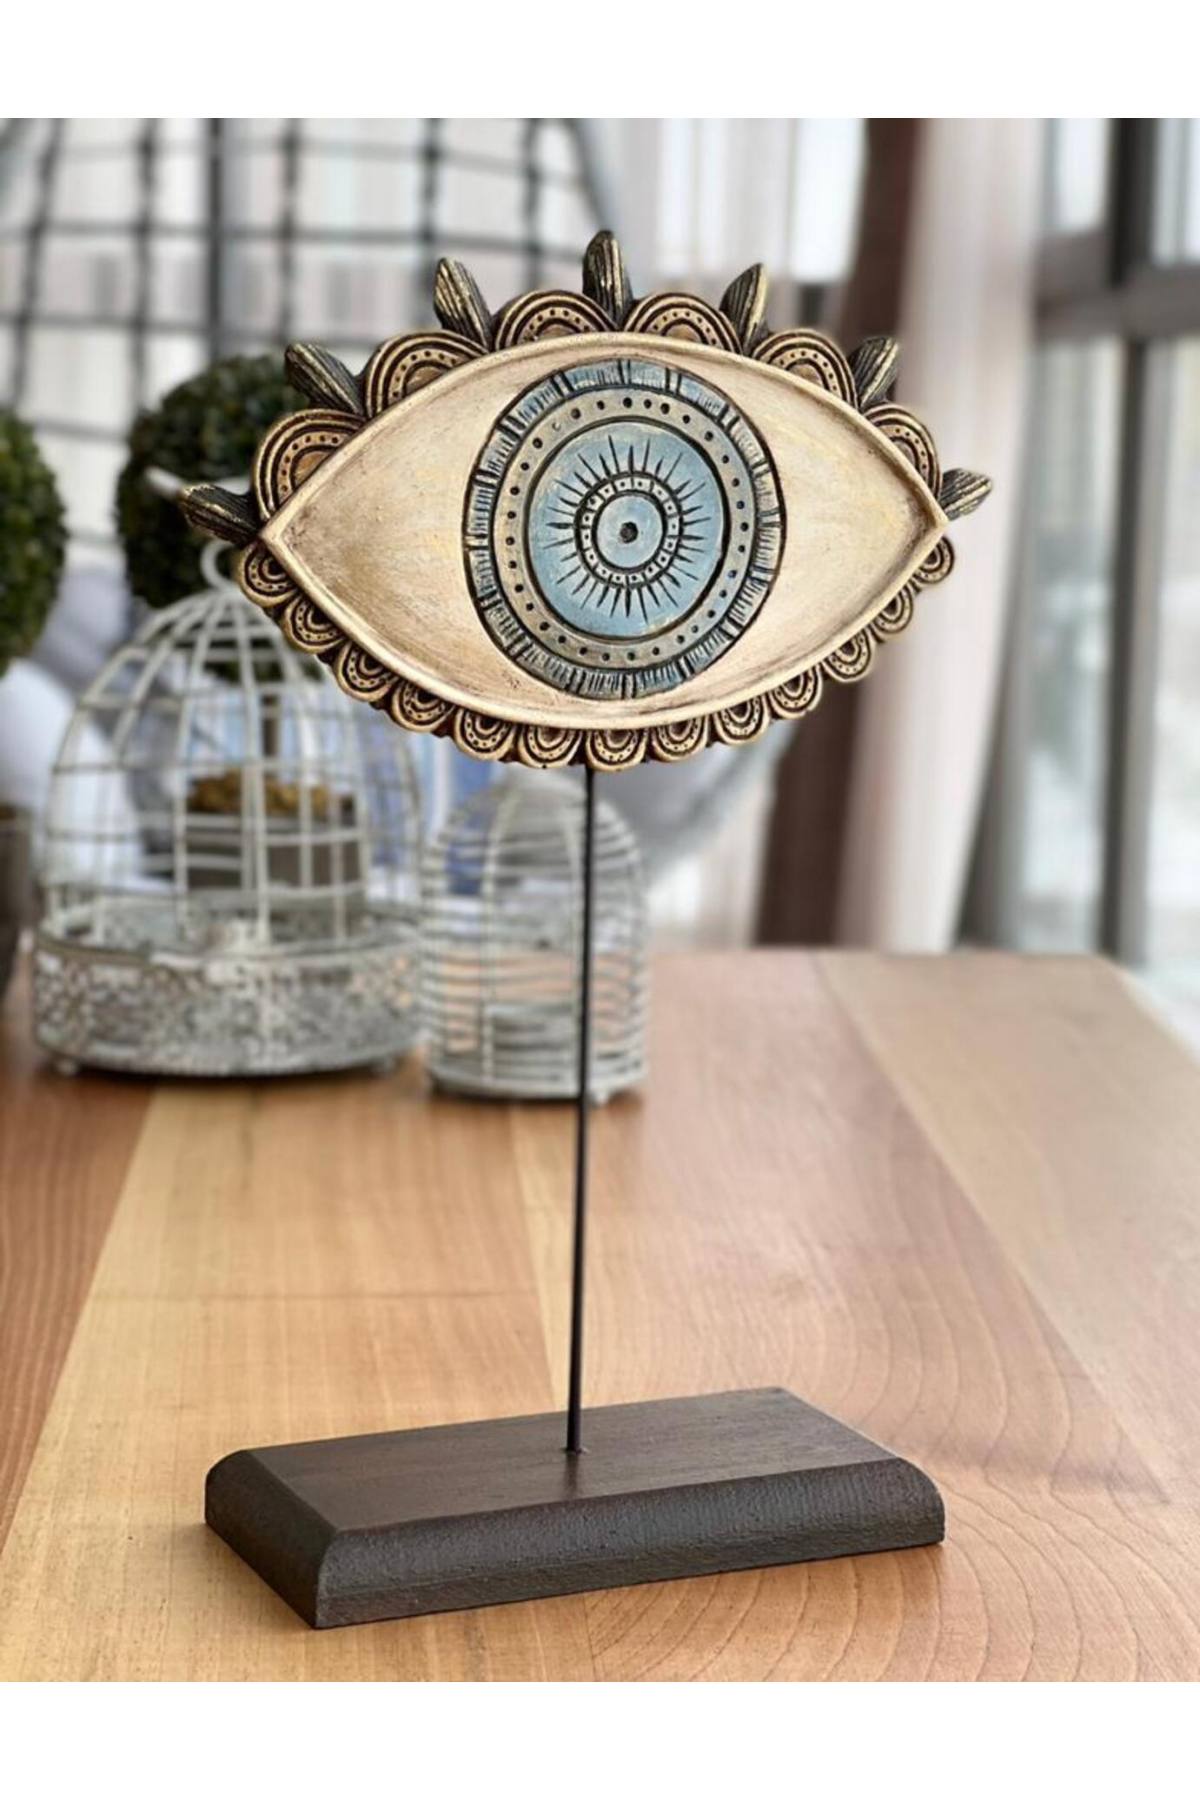 Charm eye trinket tumbled special design decorative object